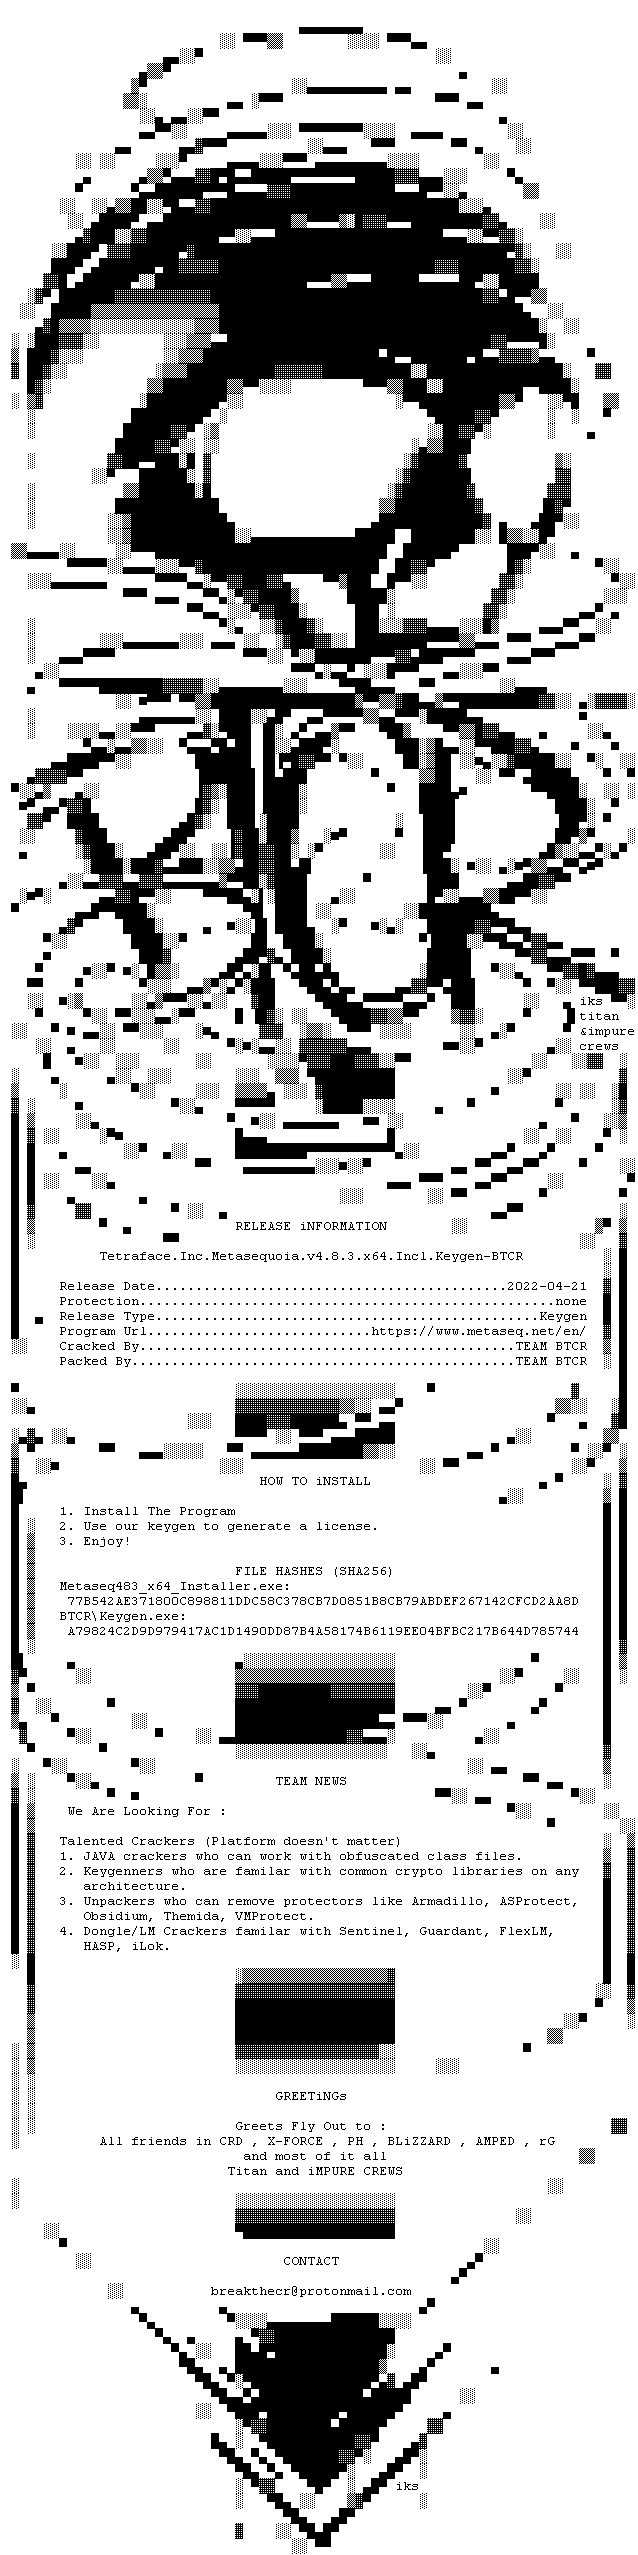 Tetraface.Inc.Metasequoia.v4.8.3.x64.Incl.Keygen BTCR